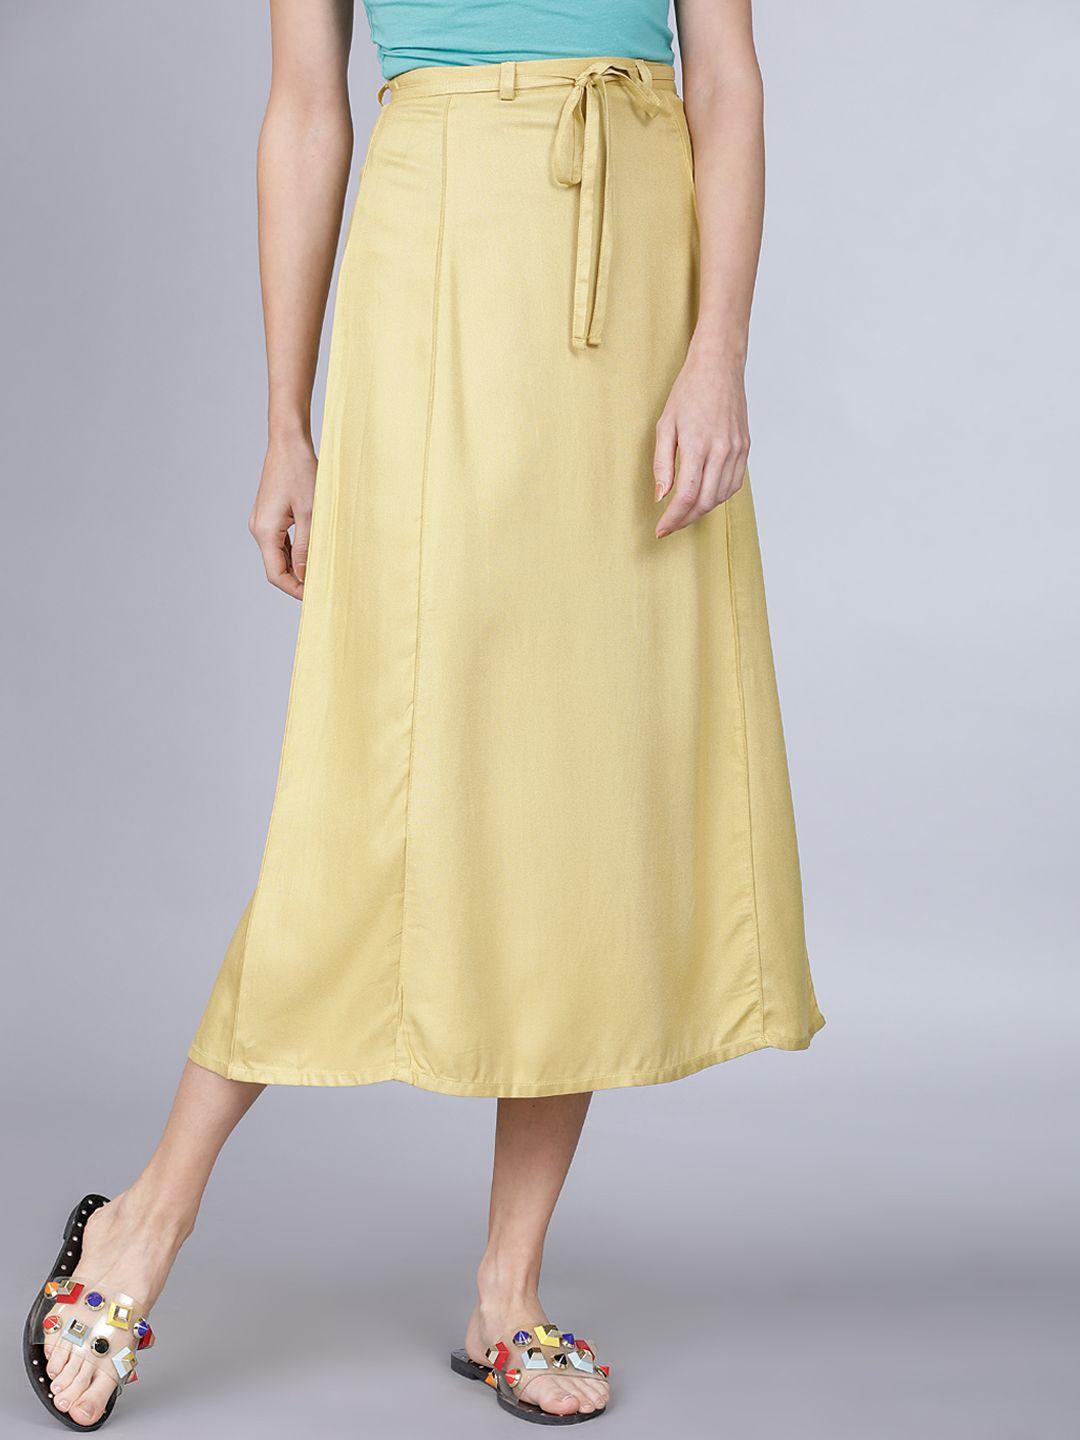 tokyo-talkies-women-mustard-yellow-solid-a-line-midi-skirt